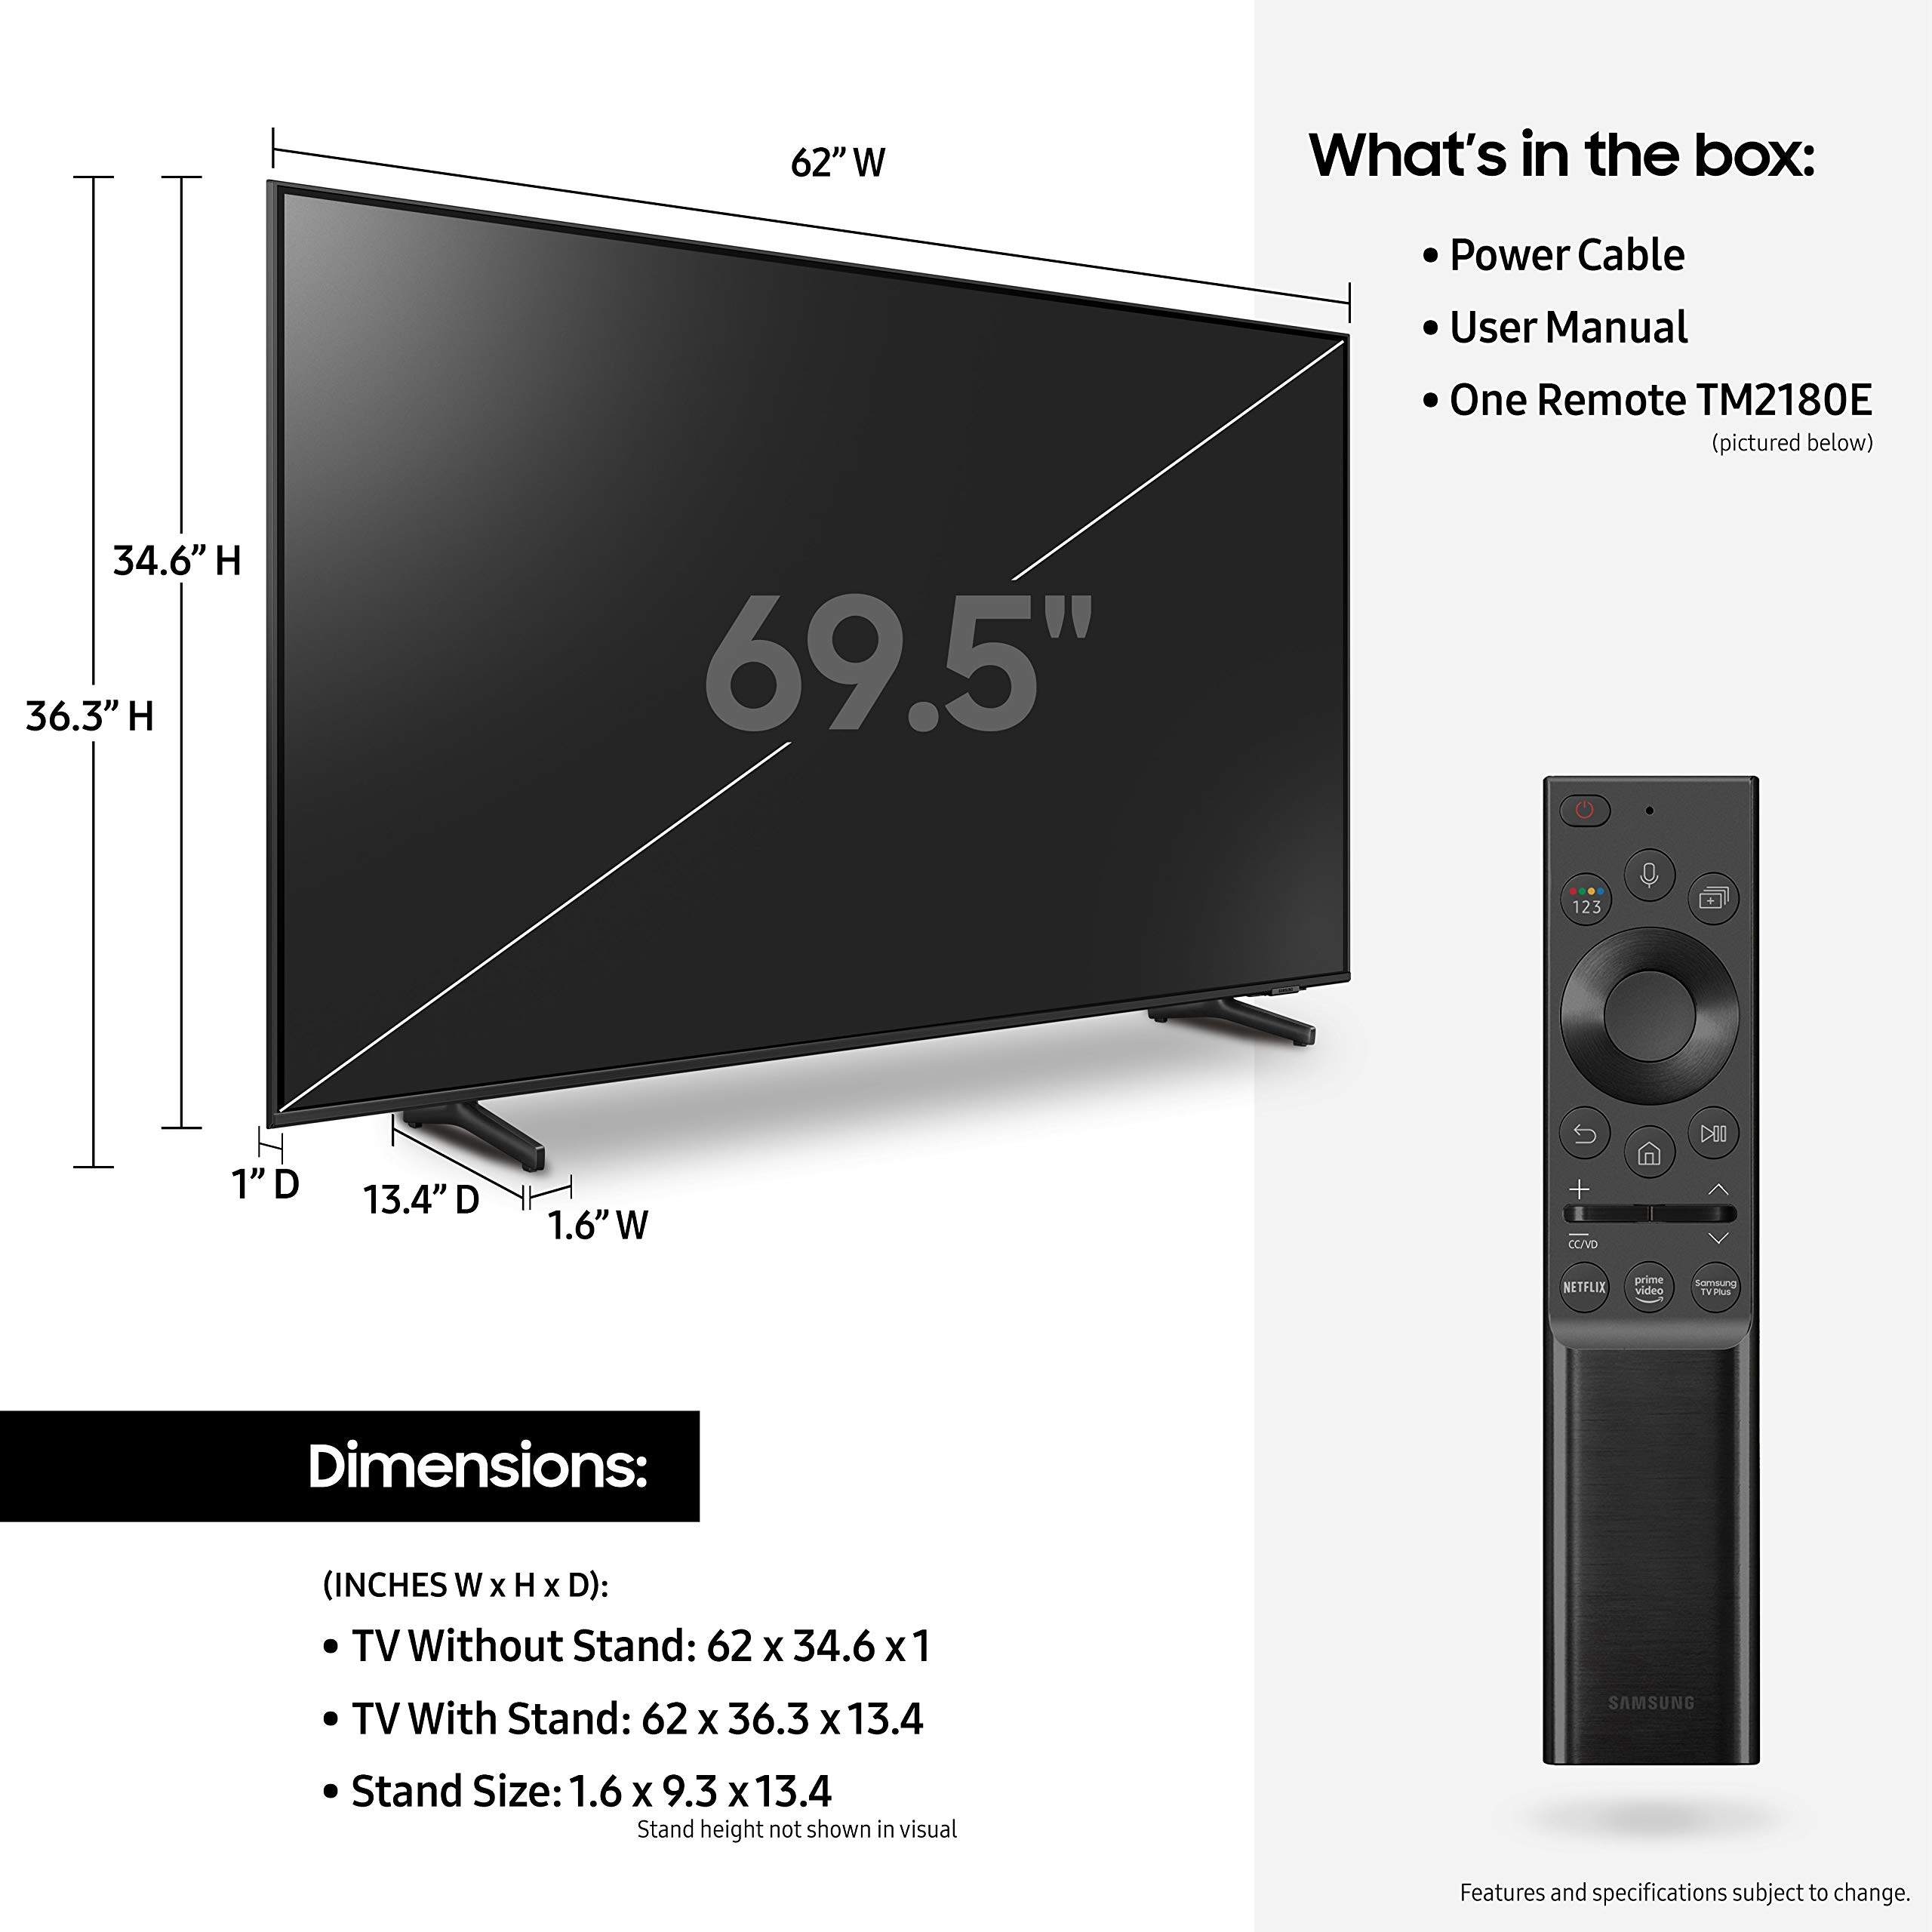 SAMSUNG 70-Inch Class QLED Q60A Series - 4K UHD Dual LED Quantum HDR Smart TV with Alexa Built-in (QN70Q60AAVXZA, 2021 Model)